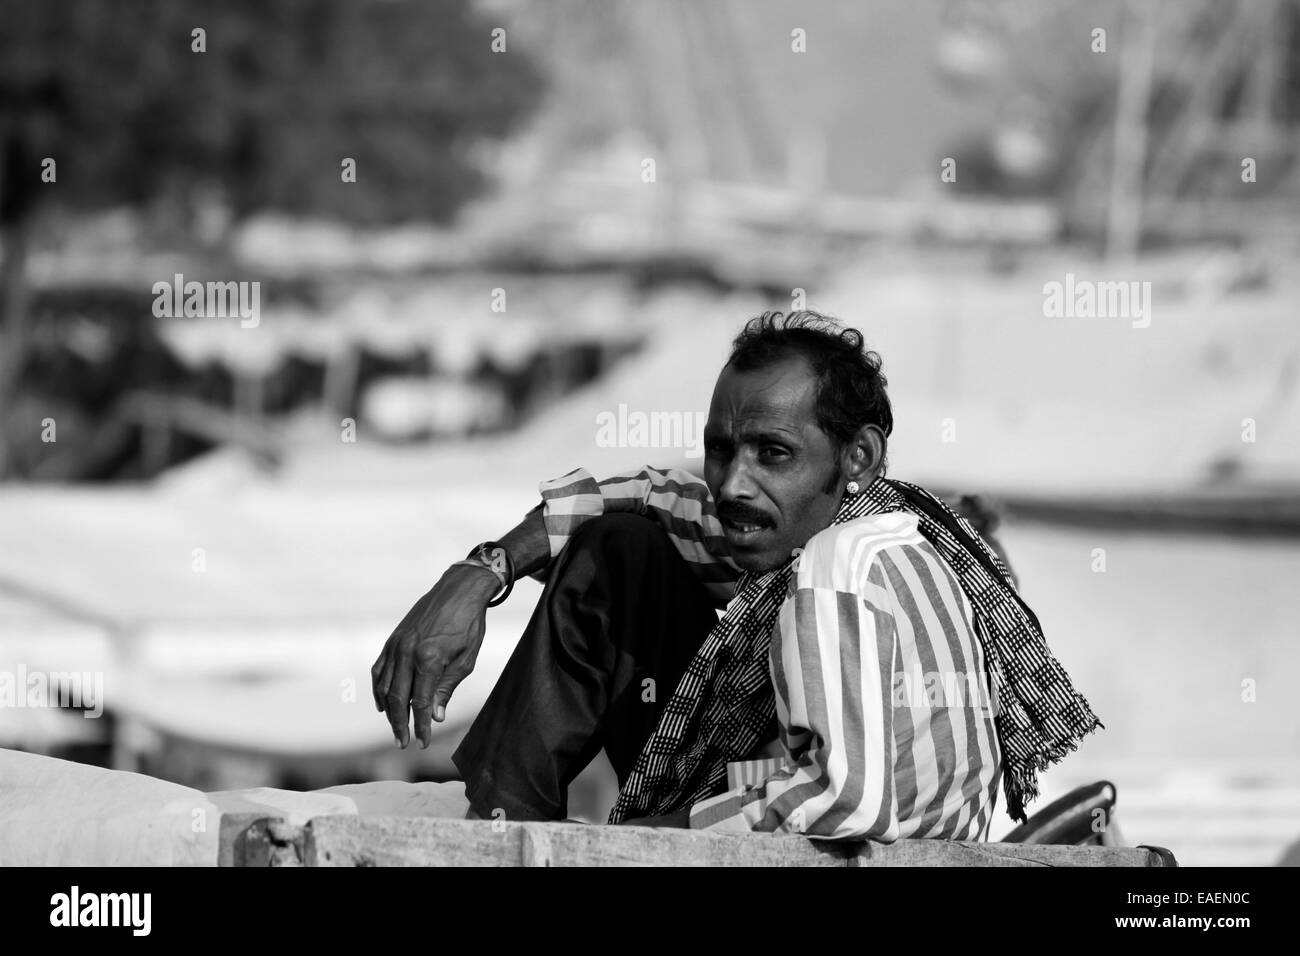 male, Indian, sitting, wearing shirt, paint, villager in Pushkar, Rajasthan, India. Stock Photo